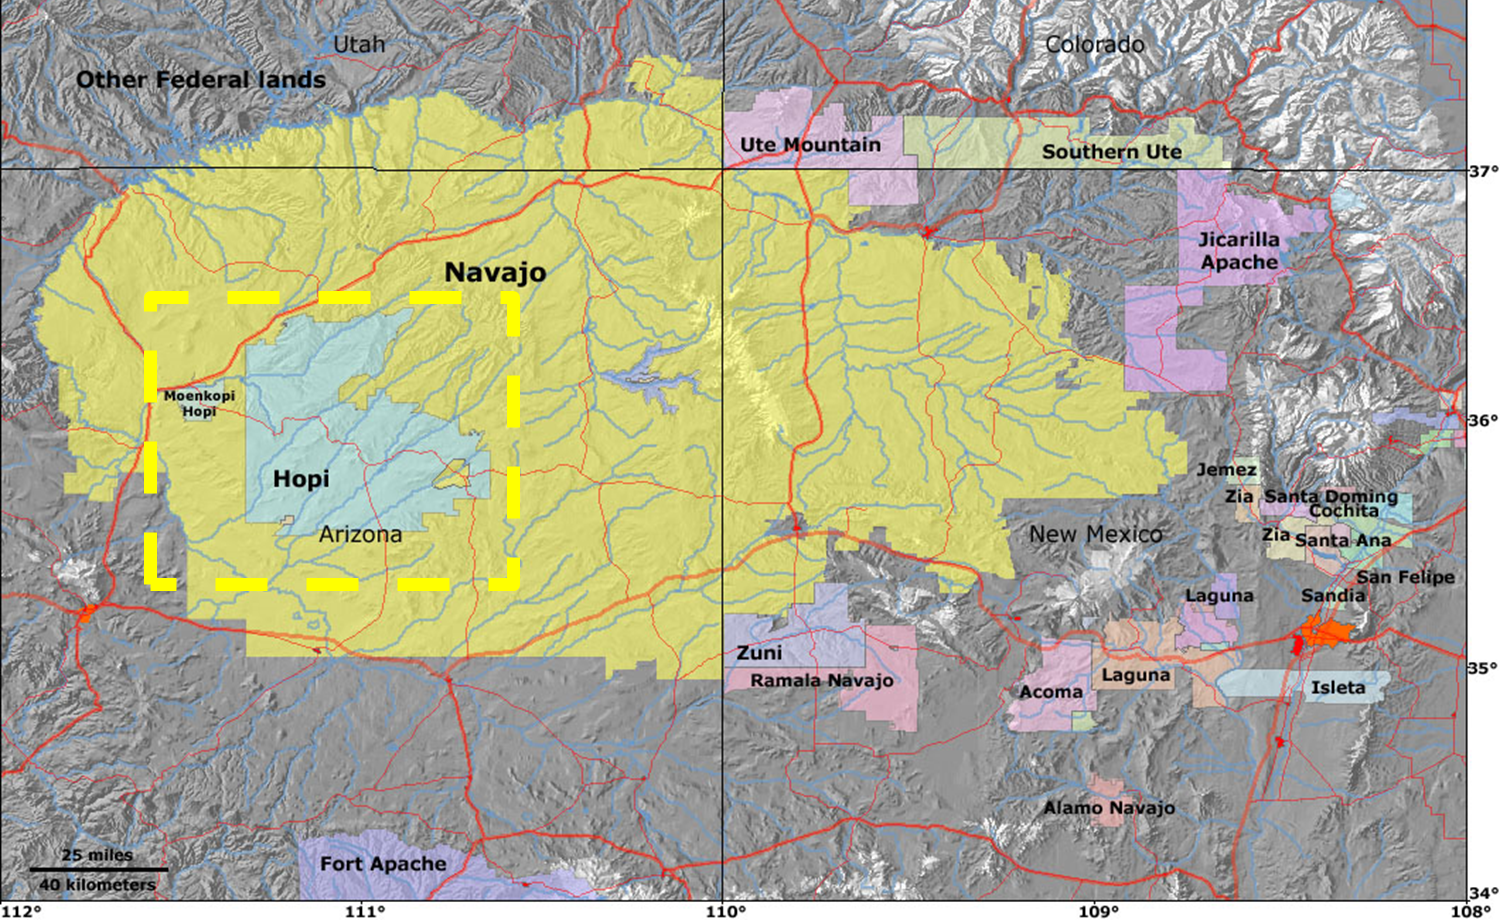 Hopi Tribe | Tribal Water Uses in the Colorado River Basin